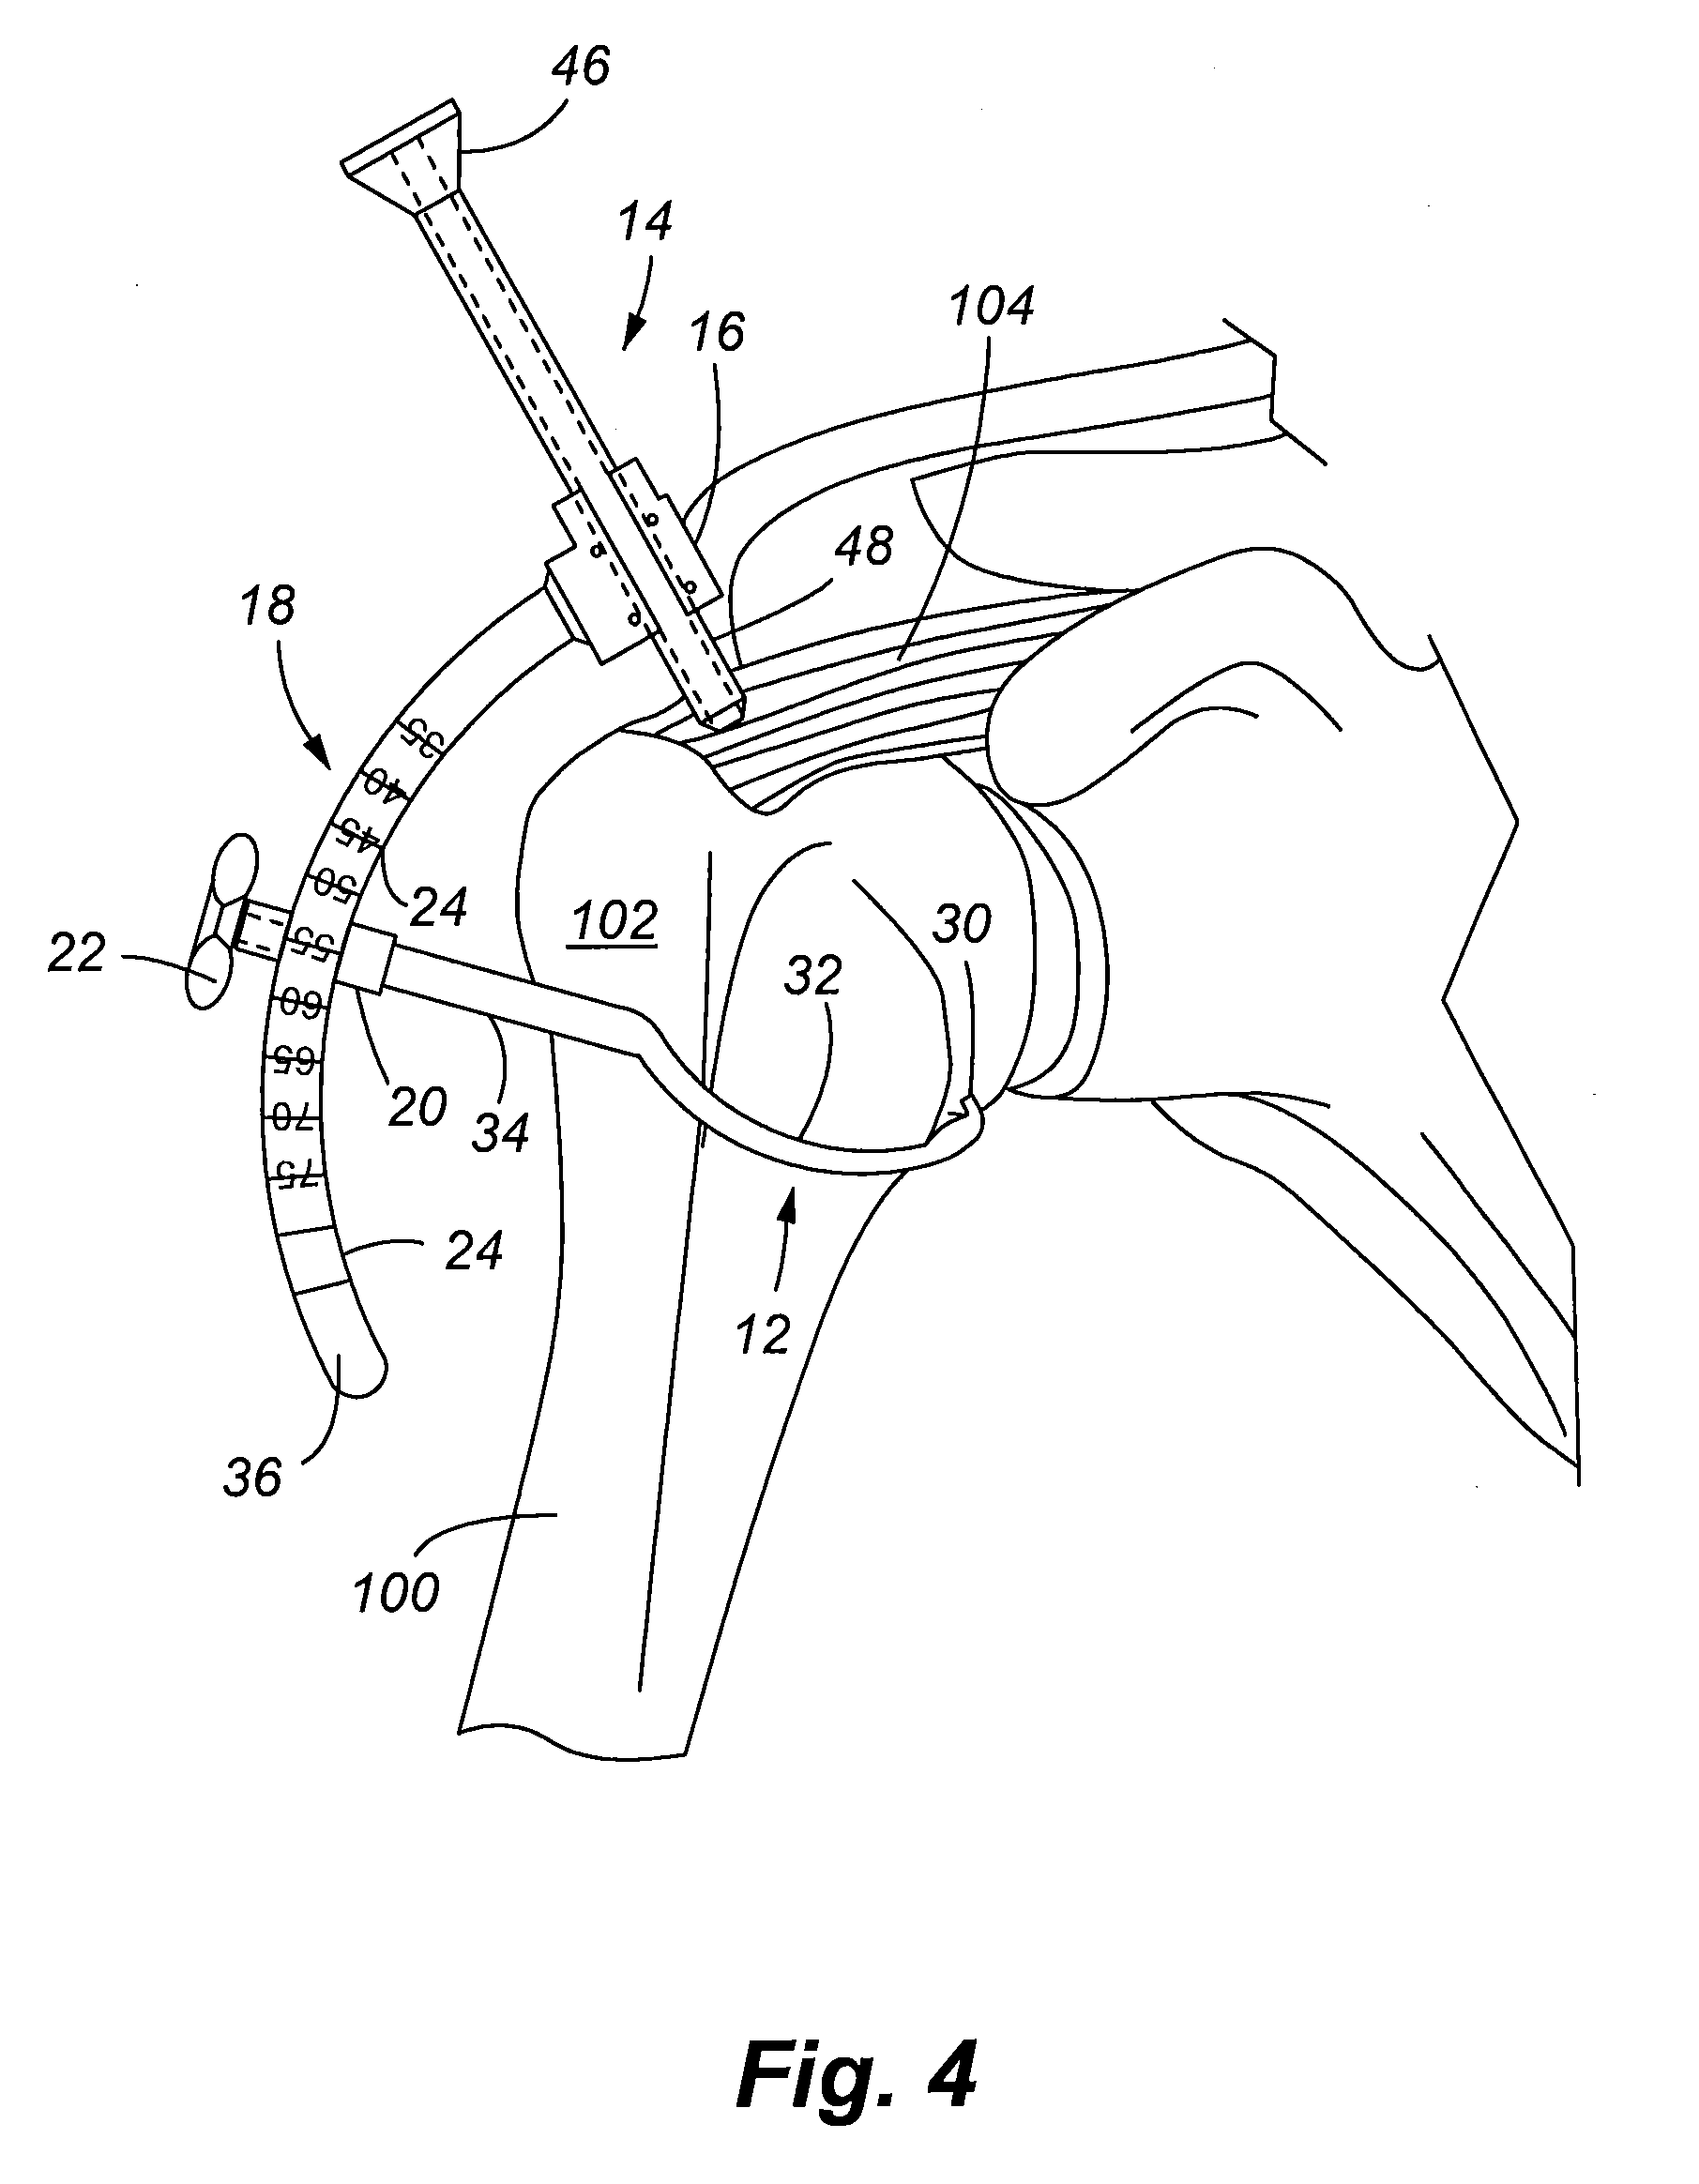 Apparatus and method for arthroscopic transhumeral rotator cuff repair